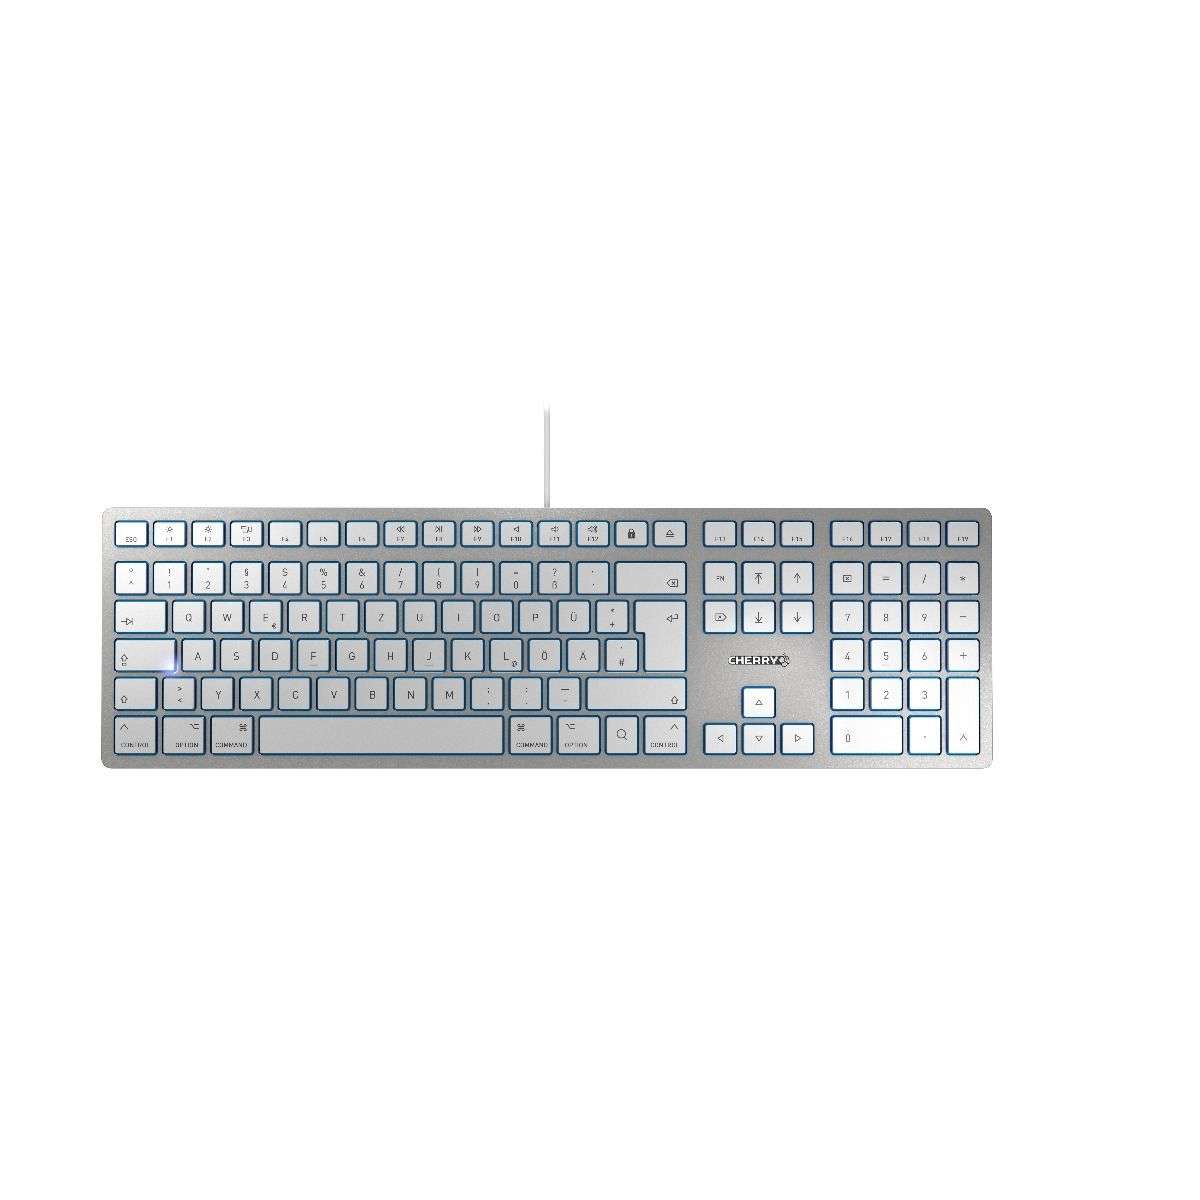 CHERRY KC 6000 SLIM MAC USB-Tastatur silber